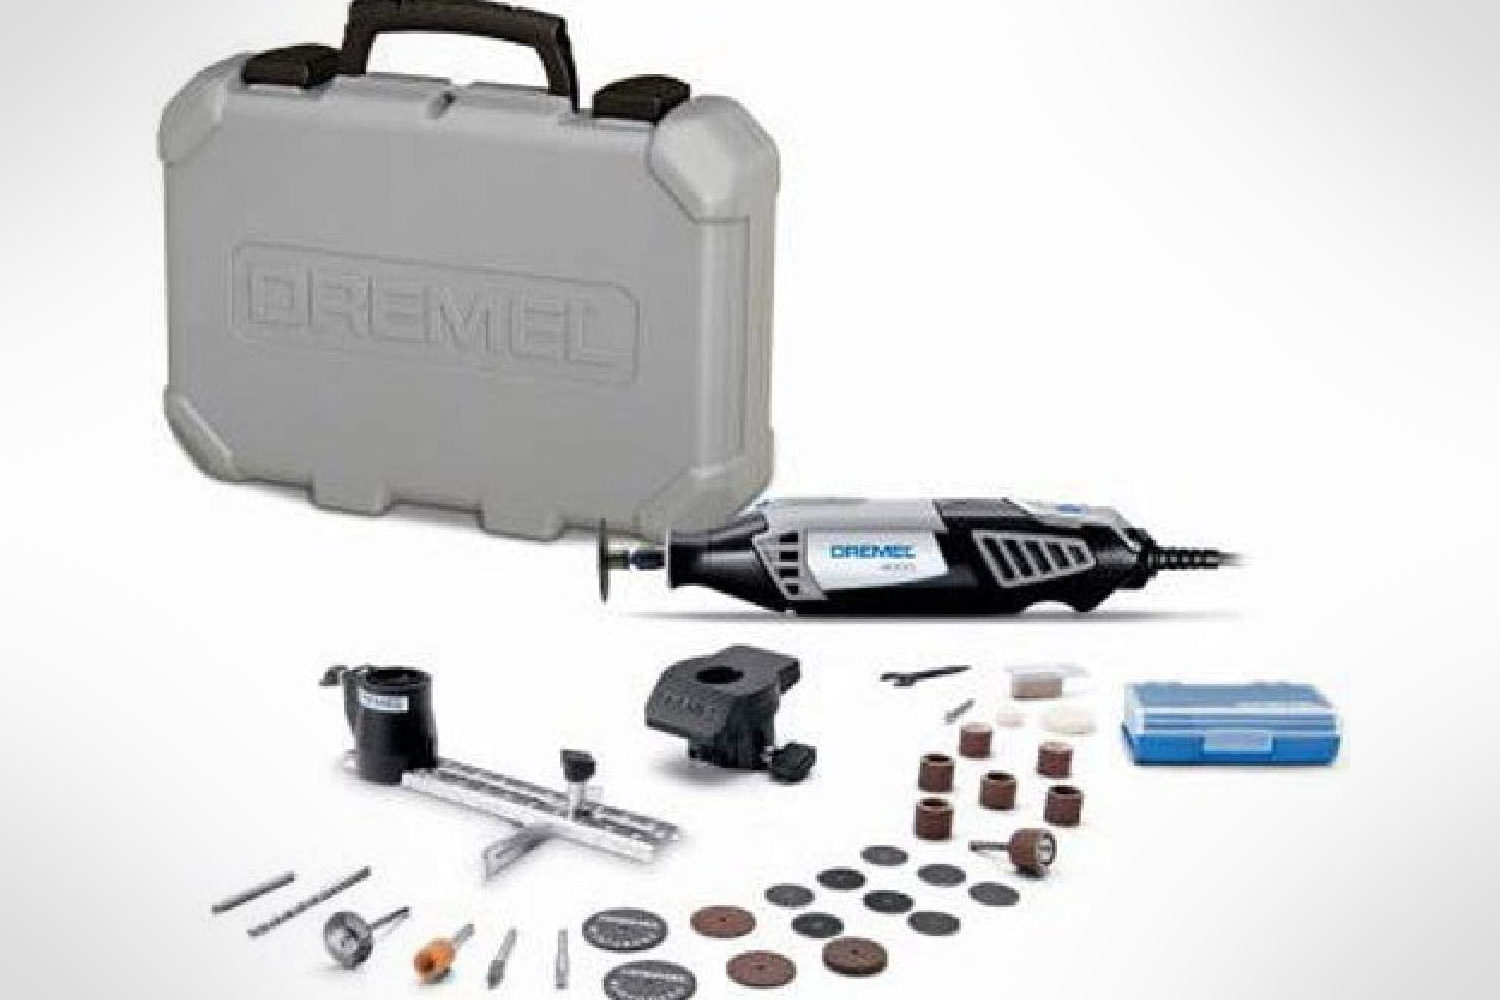 Dremel 4000-2/30 High Performance Rotary Tool Kit